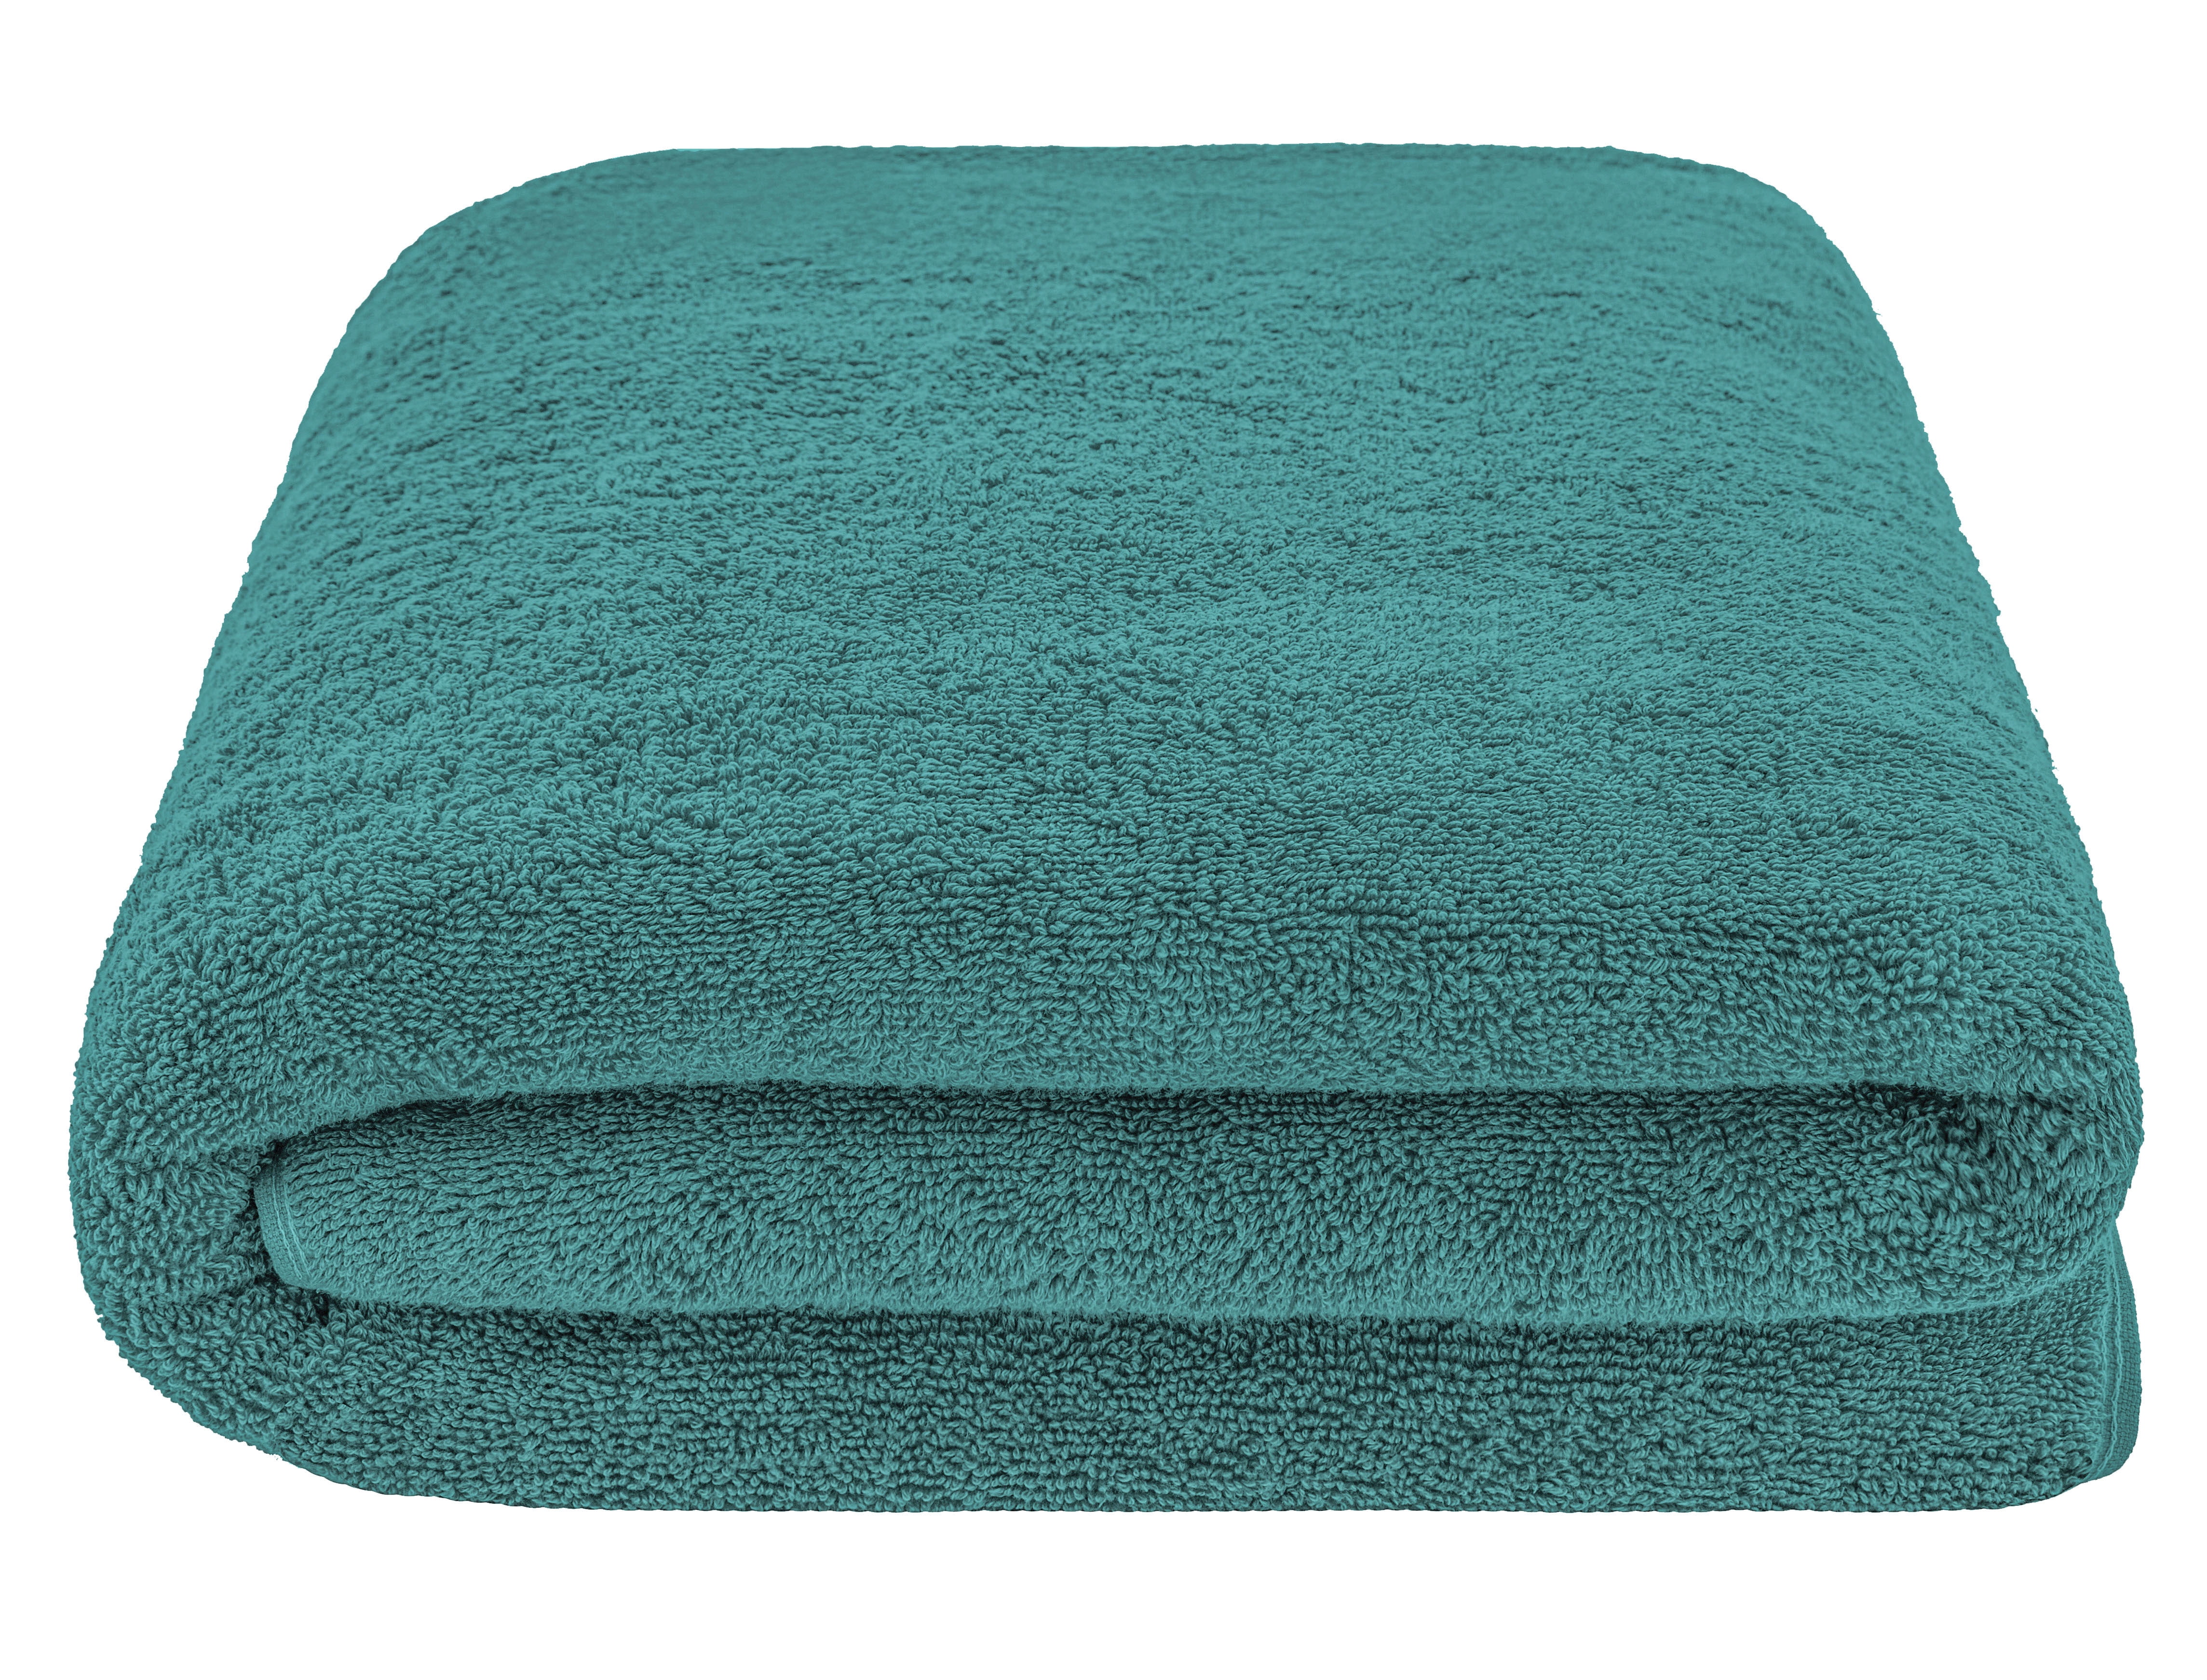 American Bath Towels Bath Sheets 40x80 Clearance, 100% Cotton Extra Large  Bath Towel, Oversized Turkish Bath Towel for Bathroom, Sky Blue